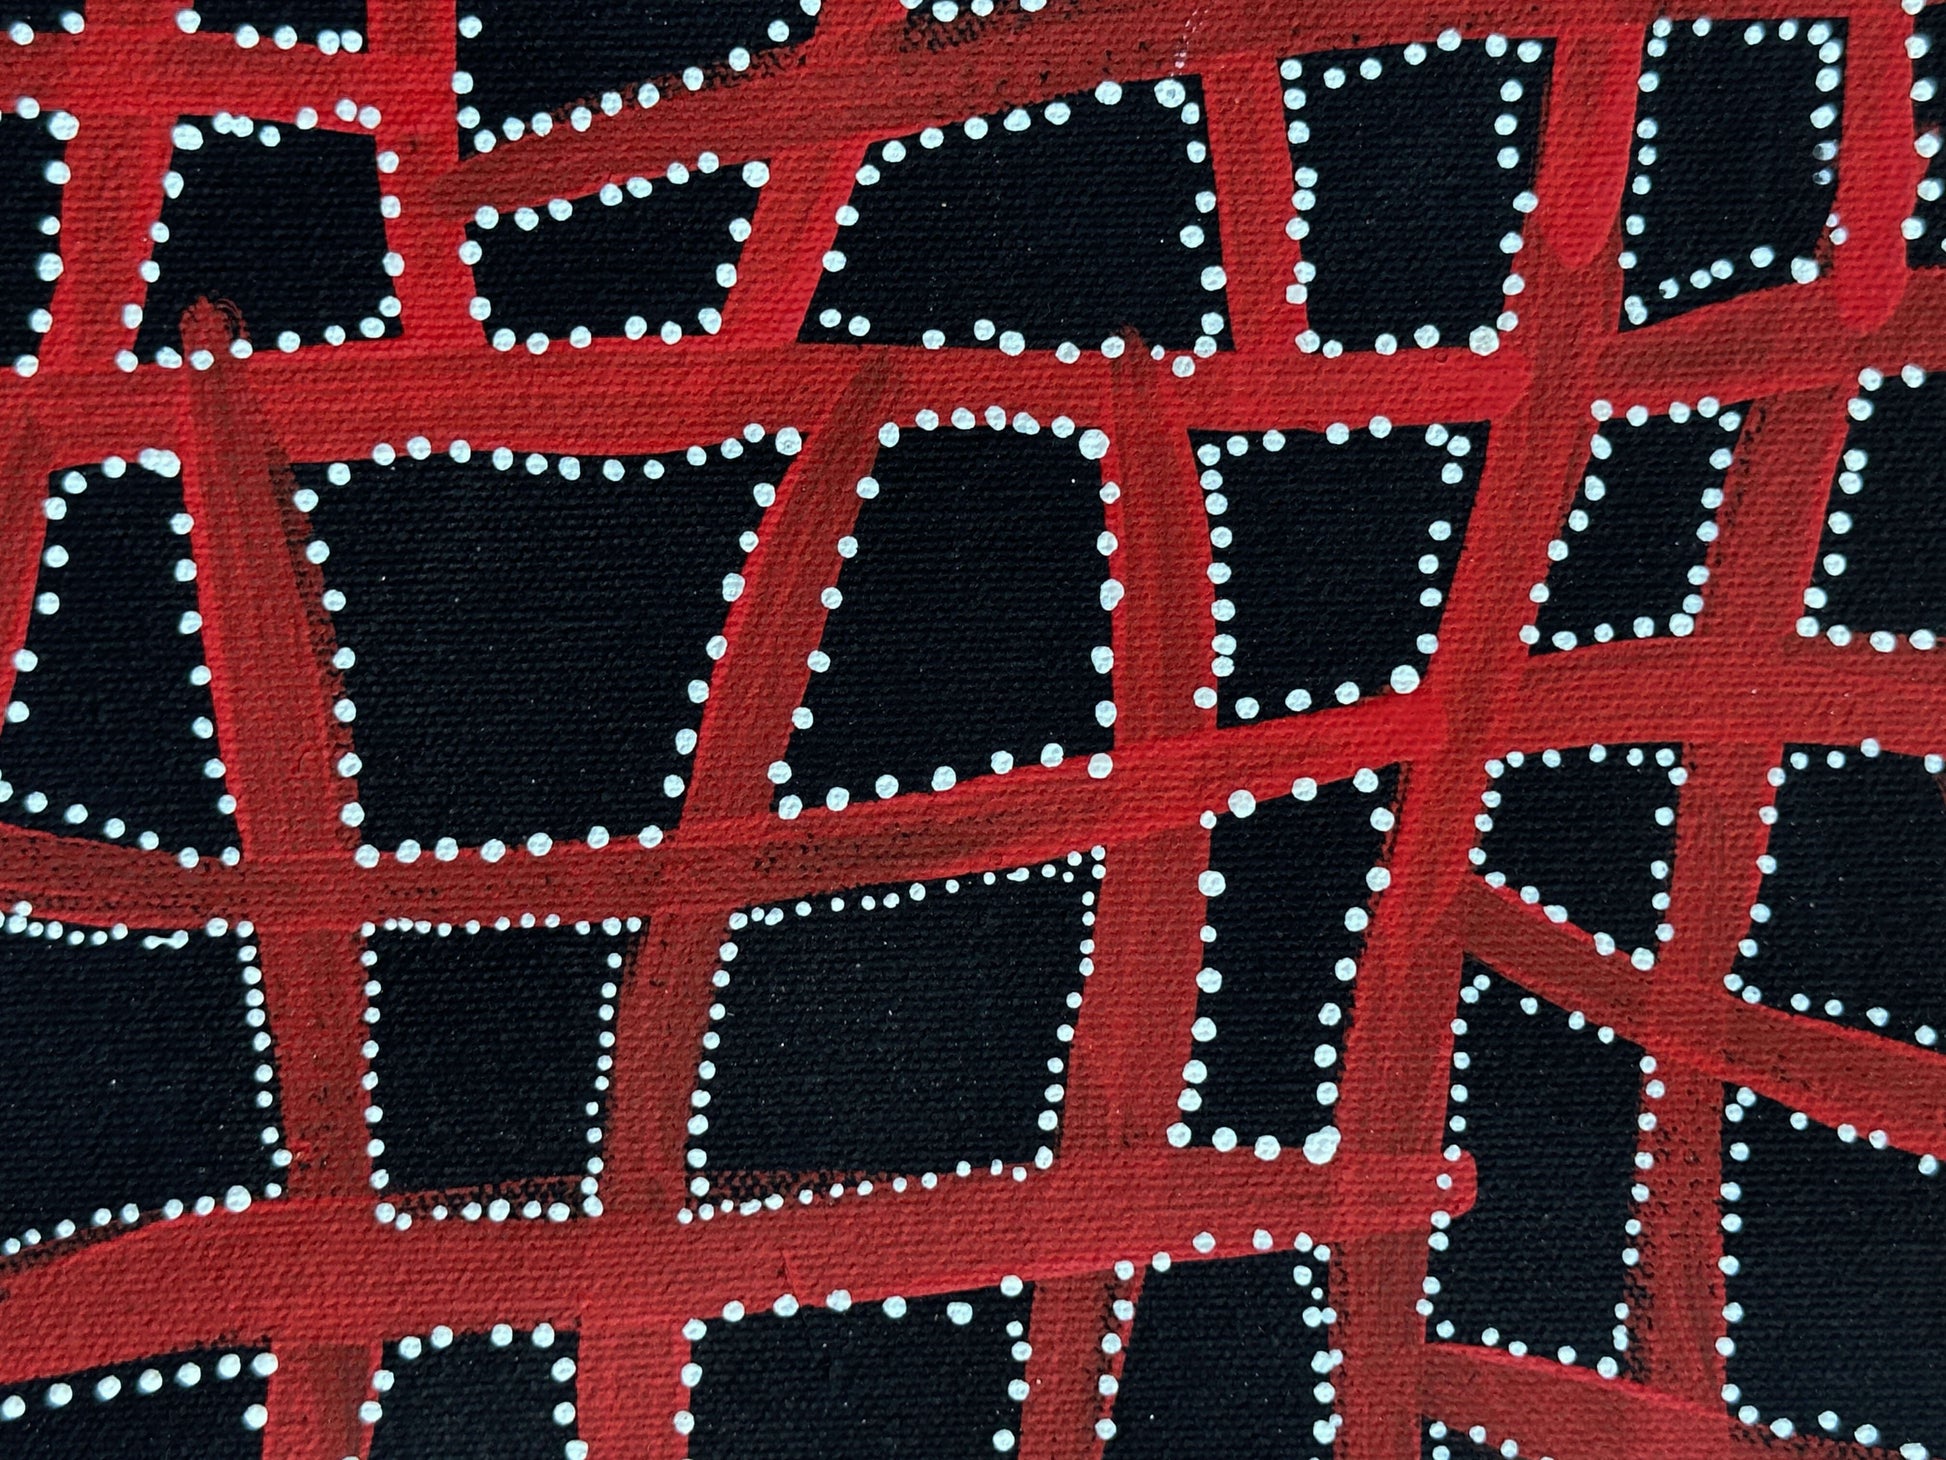 Abie Loy Kamarre + Aweyle + Dot Art Painting + Dot artwork + Utopia + Indigenous Art + Aboriginal Art + Australian Art + Contemporary Art + Traditional Artwork + Darwin Based Gallery + Body Paint